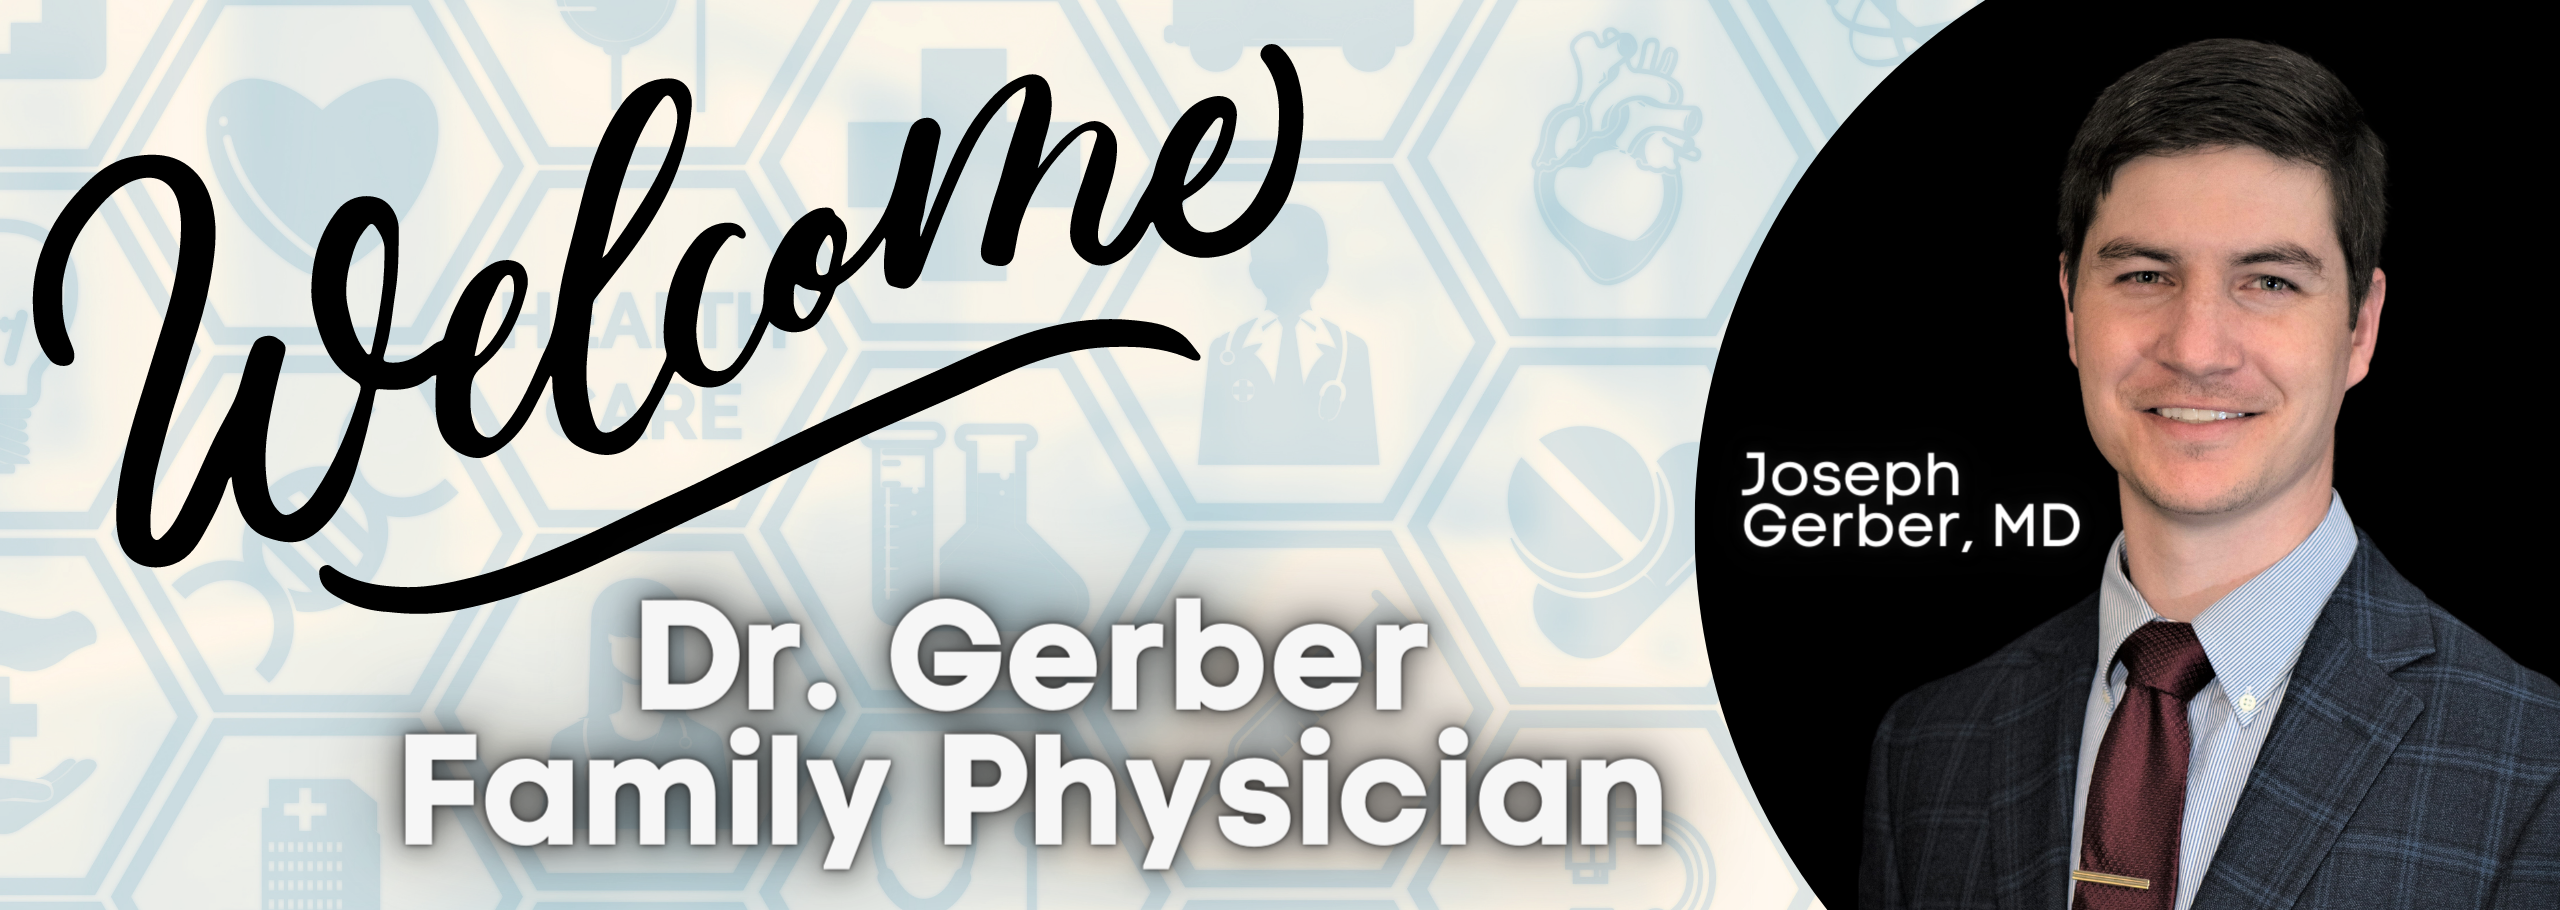 Welcome Dr. Gerber Family Physician 
Joseph Gerber, MD